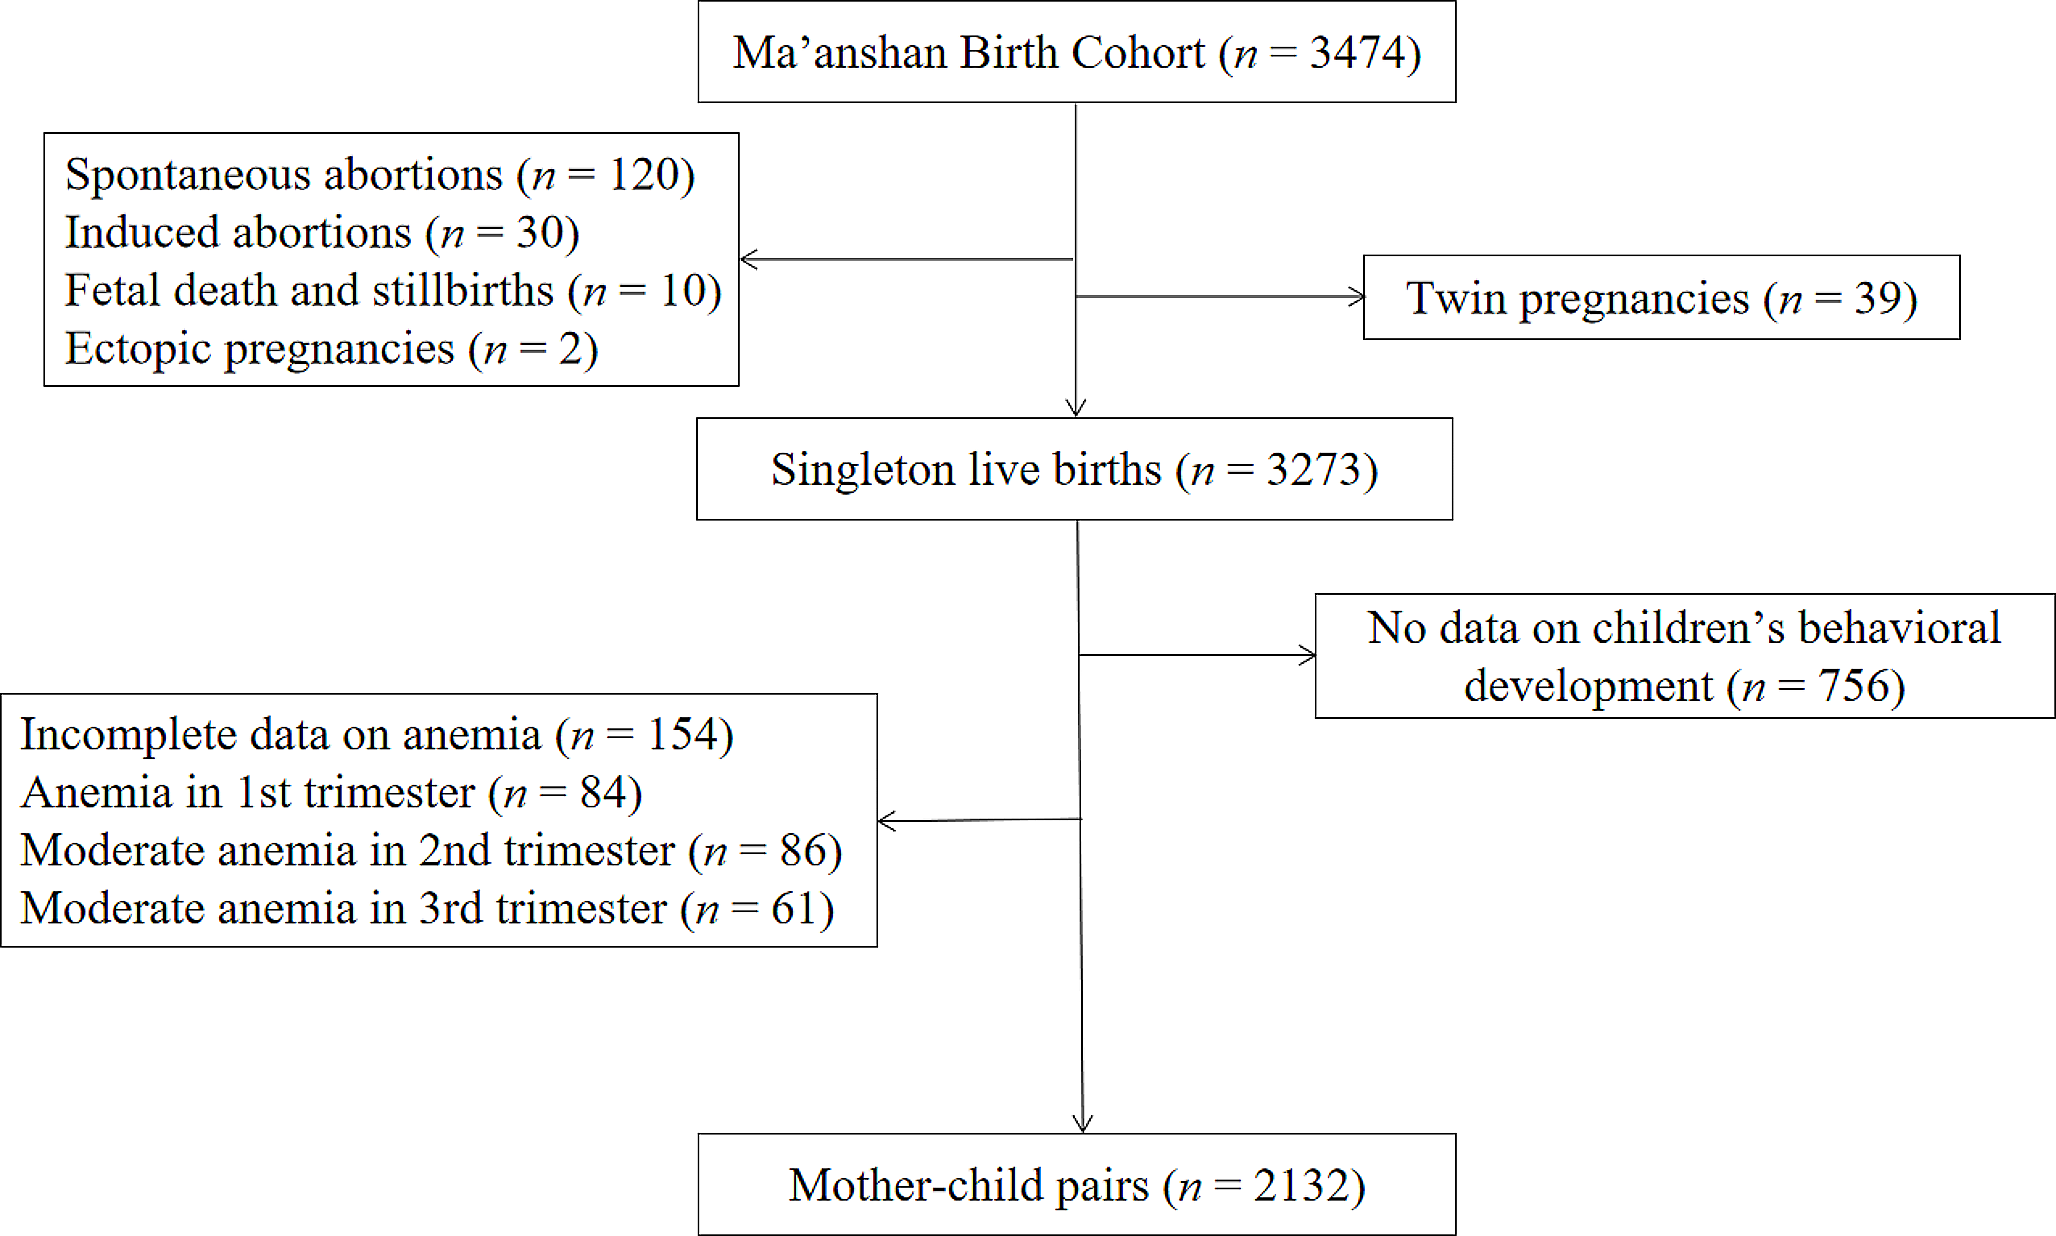 Sex-specific association between maternal mild anemia and children’s behavioral development: a birth cohort study